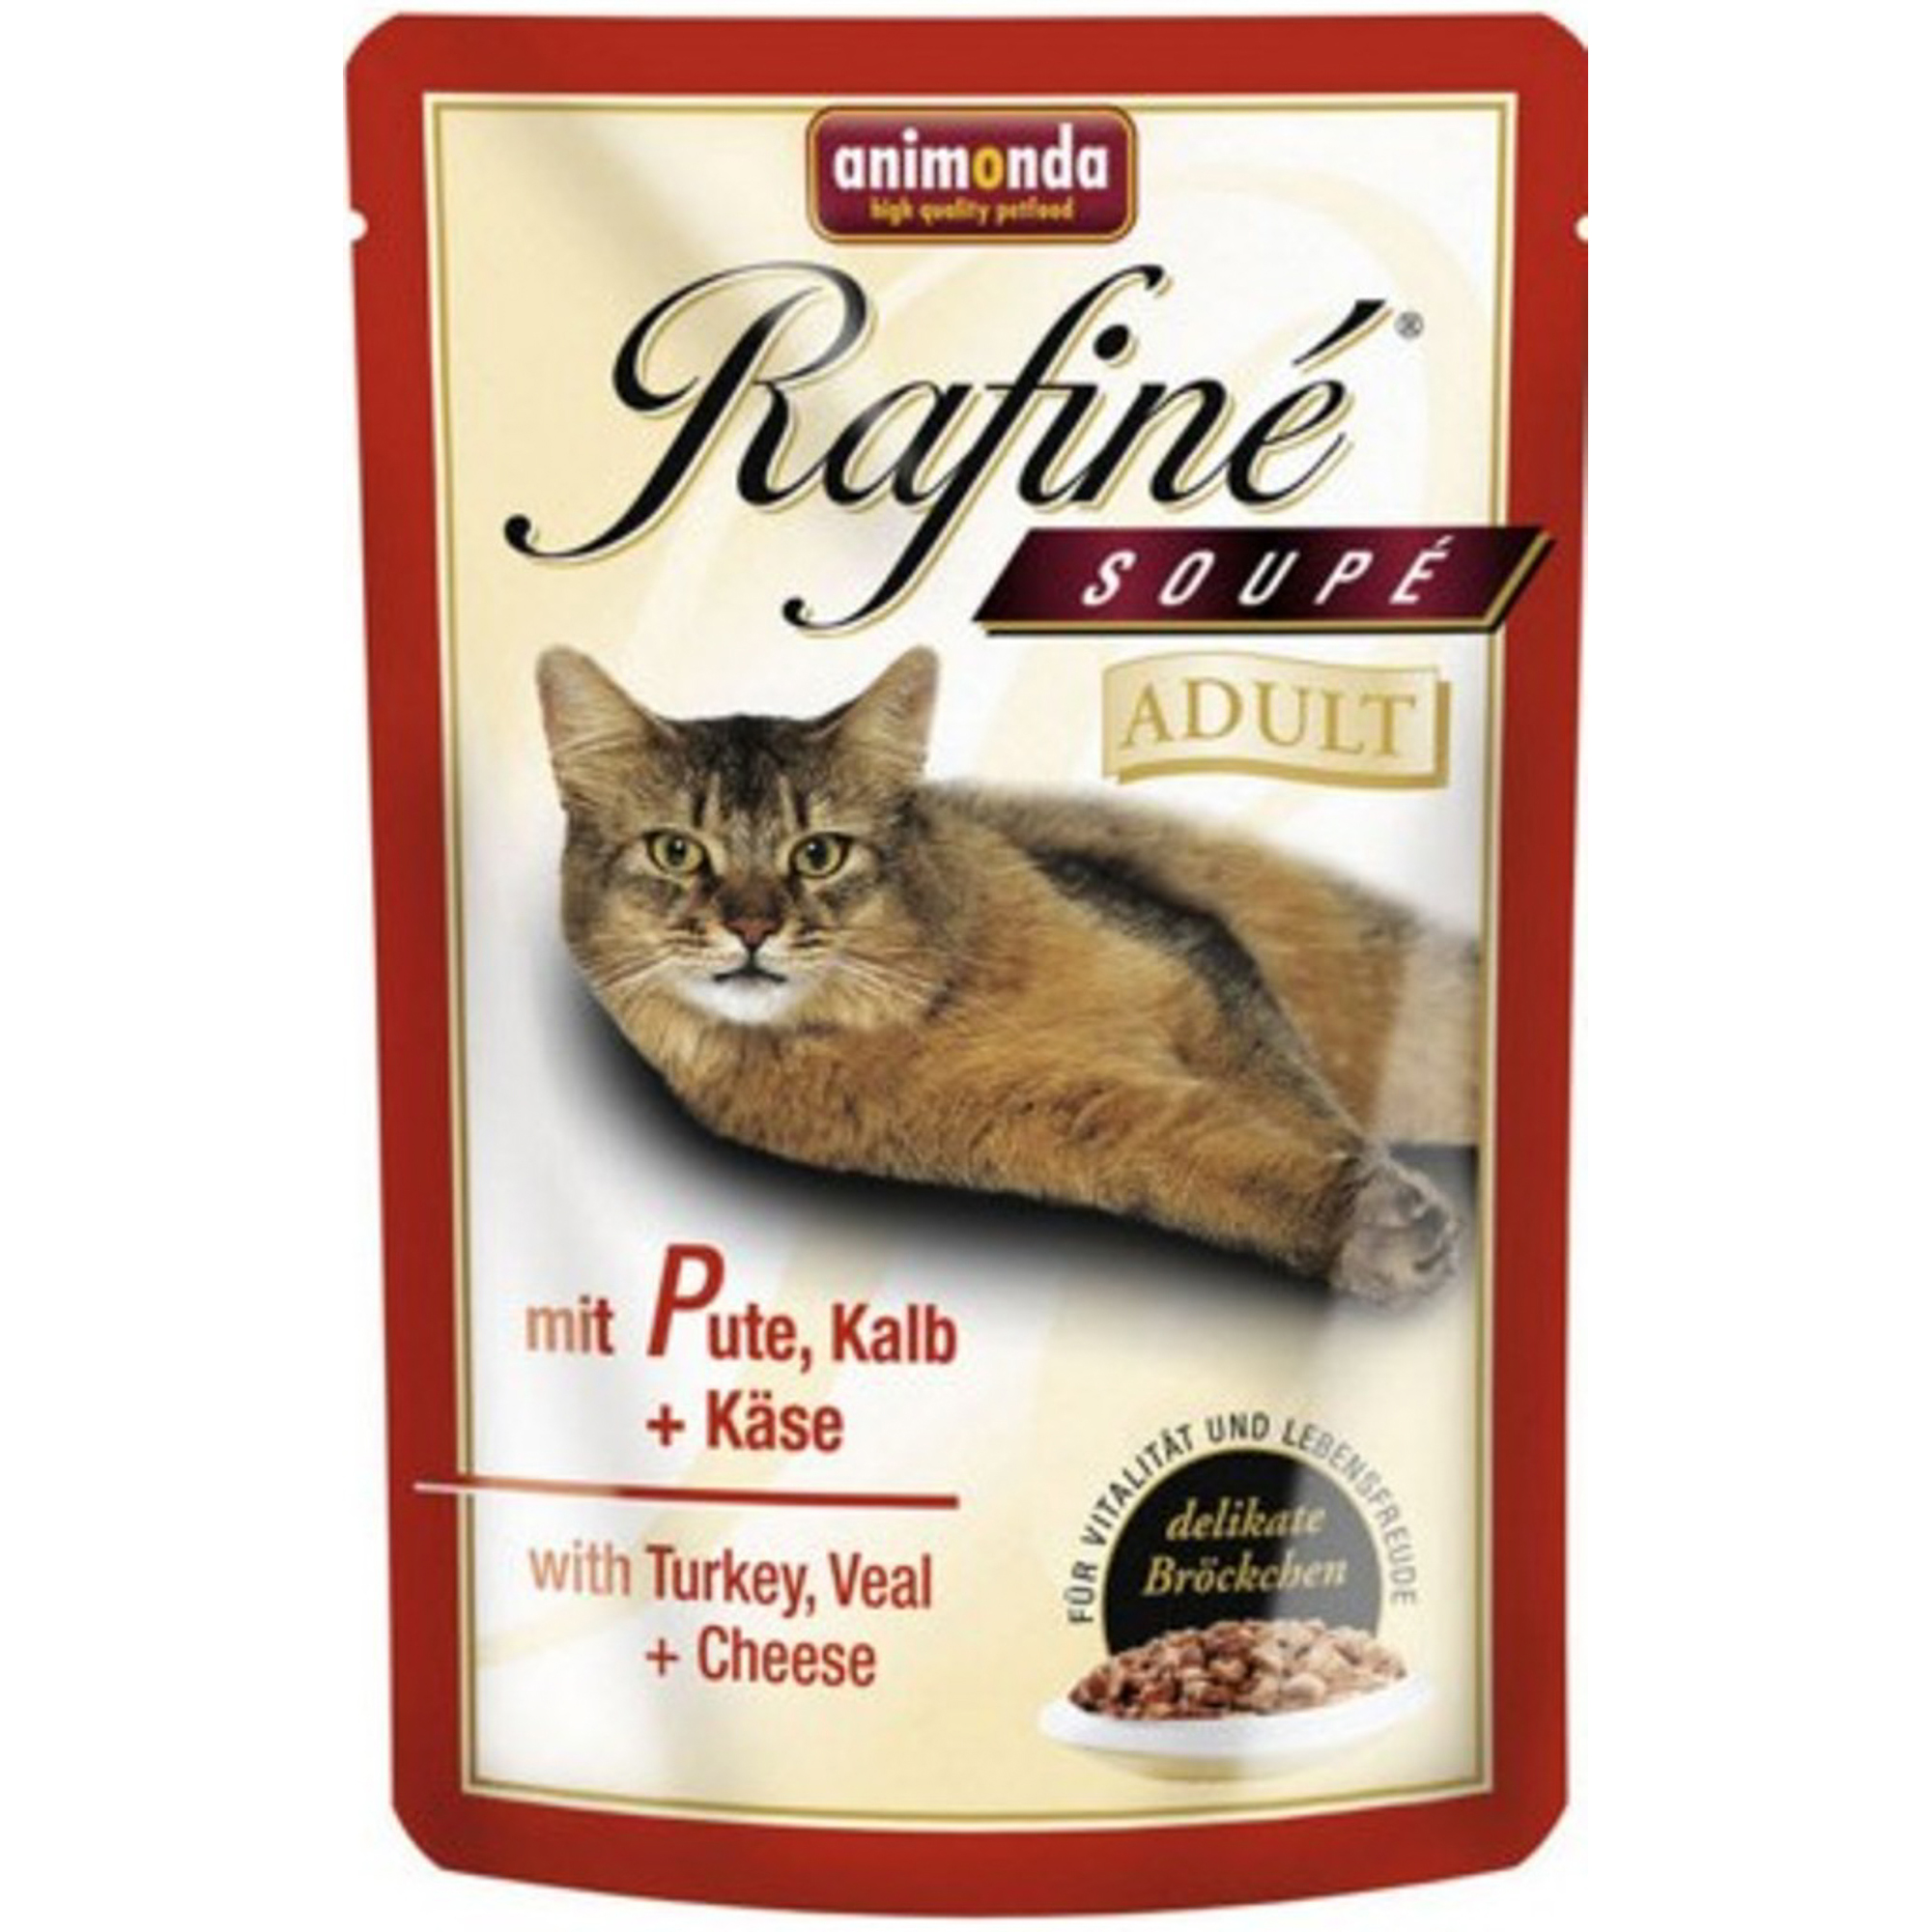 фото Корм для кошек animonda rafine soupe индейка, телятина и сыр 100г